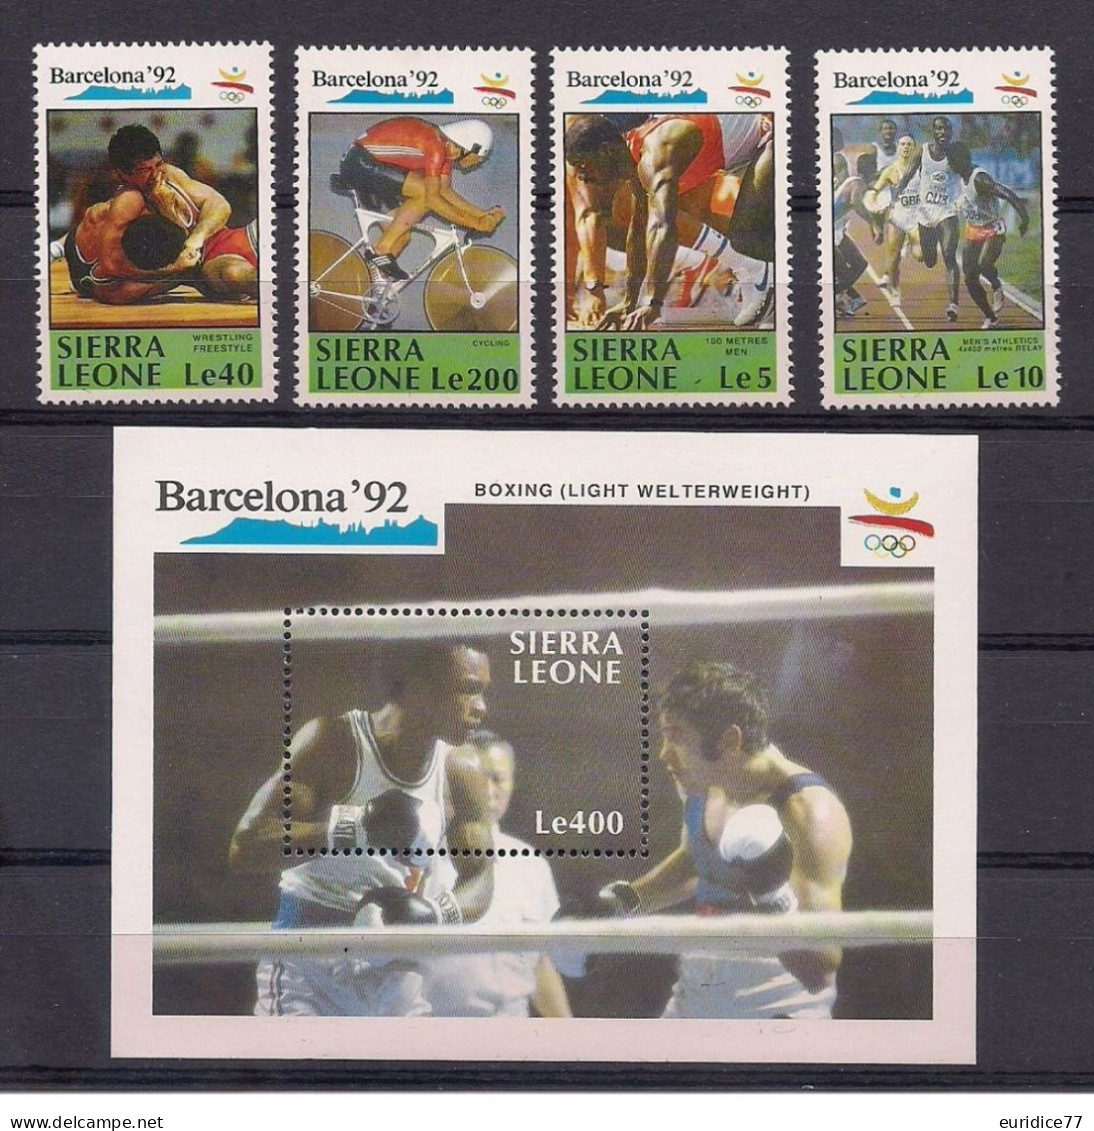 Sierra Leone 1990 - Olympic Games Barcelona 92 Mnh** - Estate 1992: Barcellona